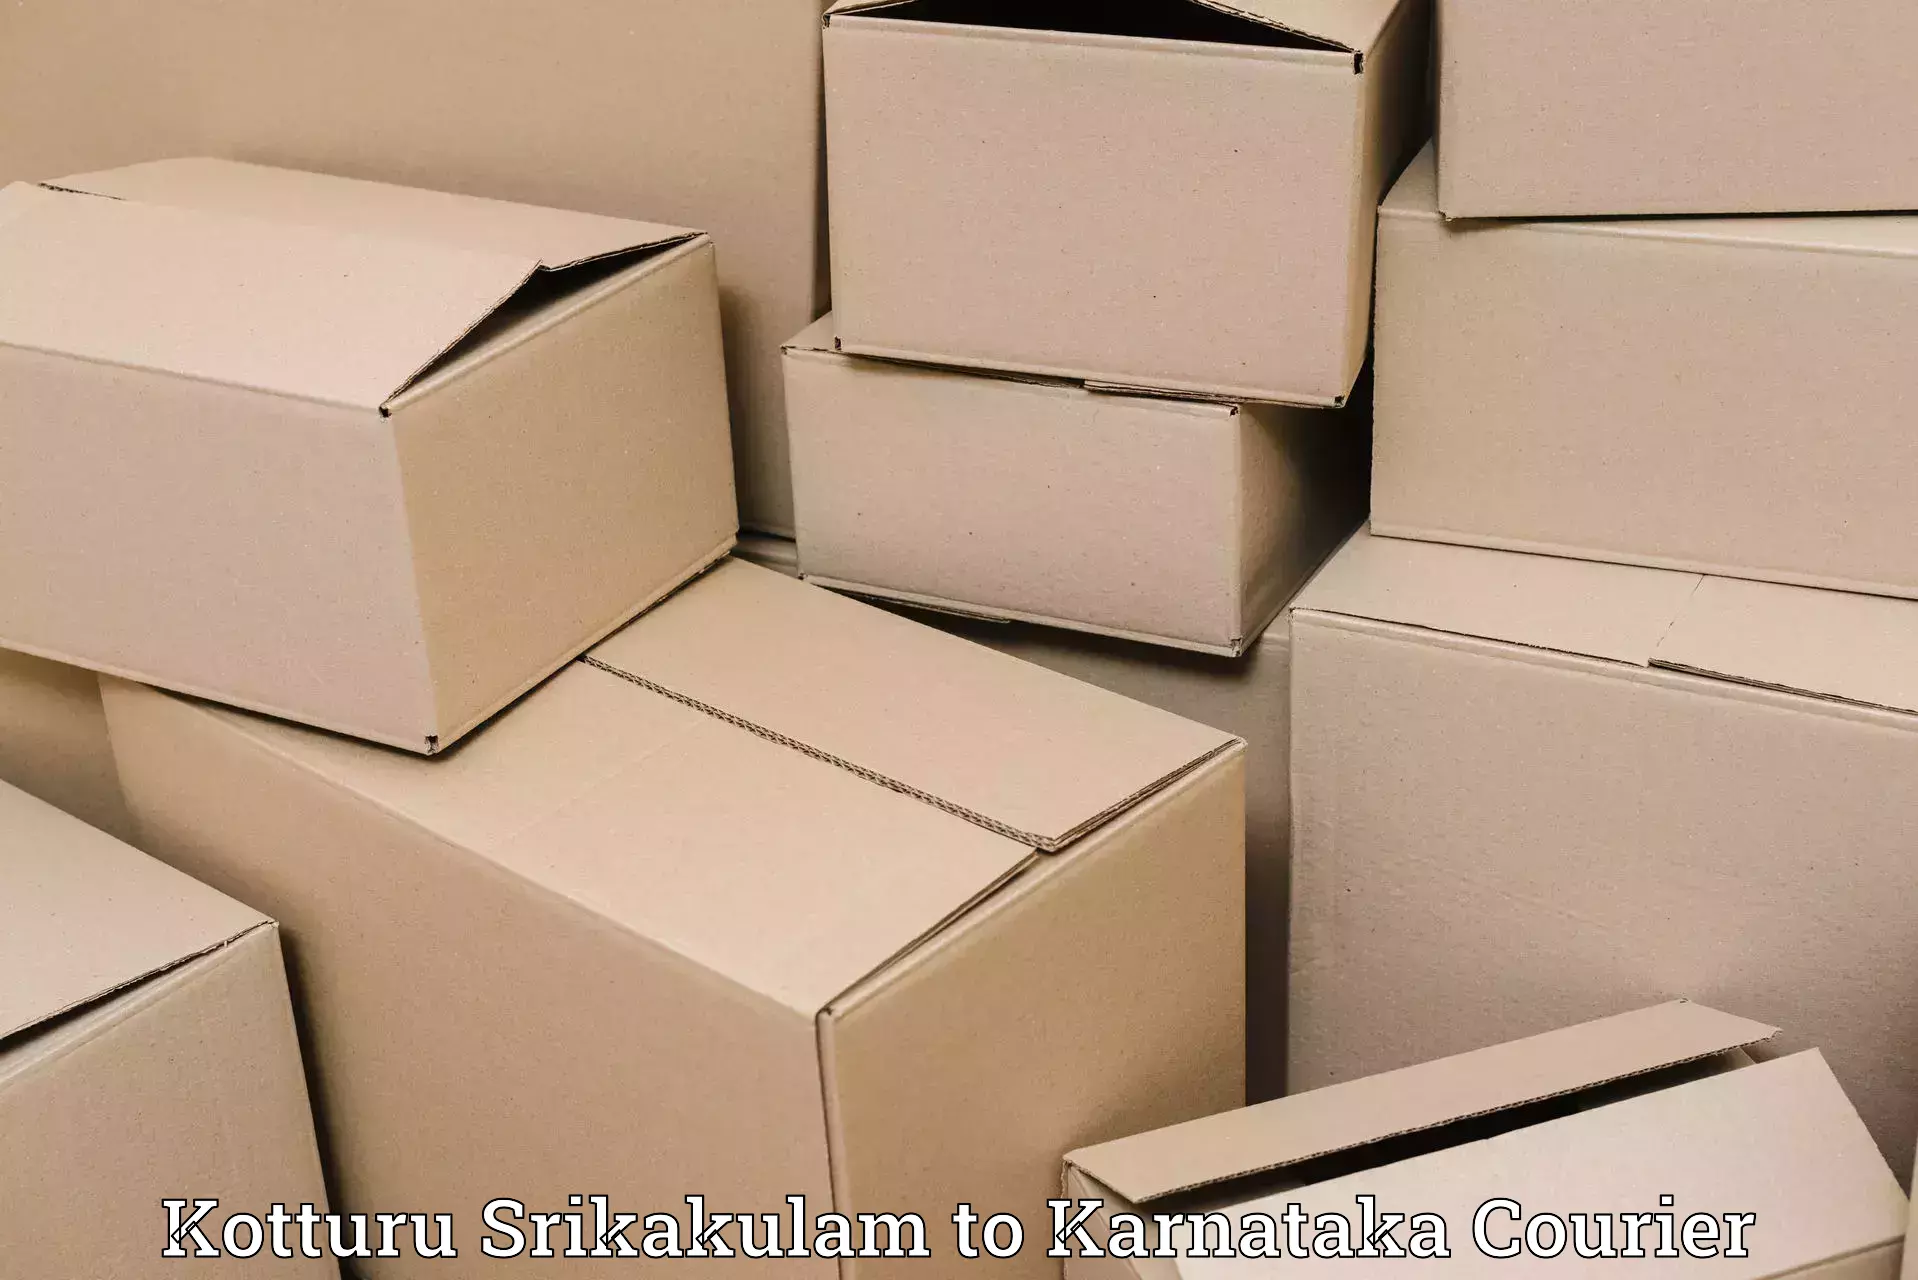 Specialized shipment handling Kotturu Srikakulam to Belur